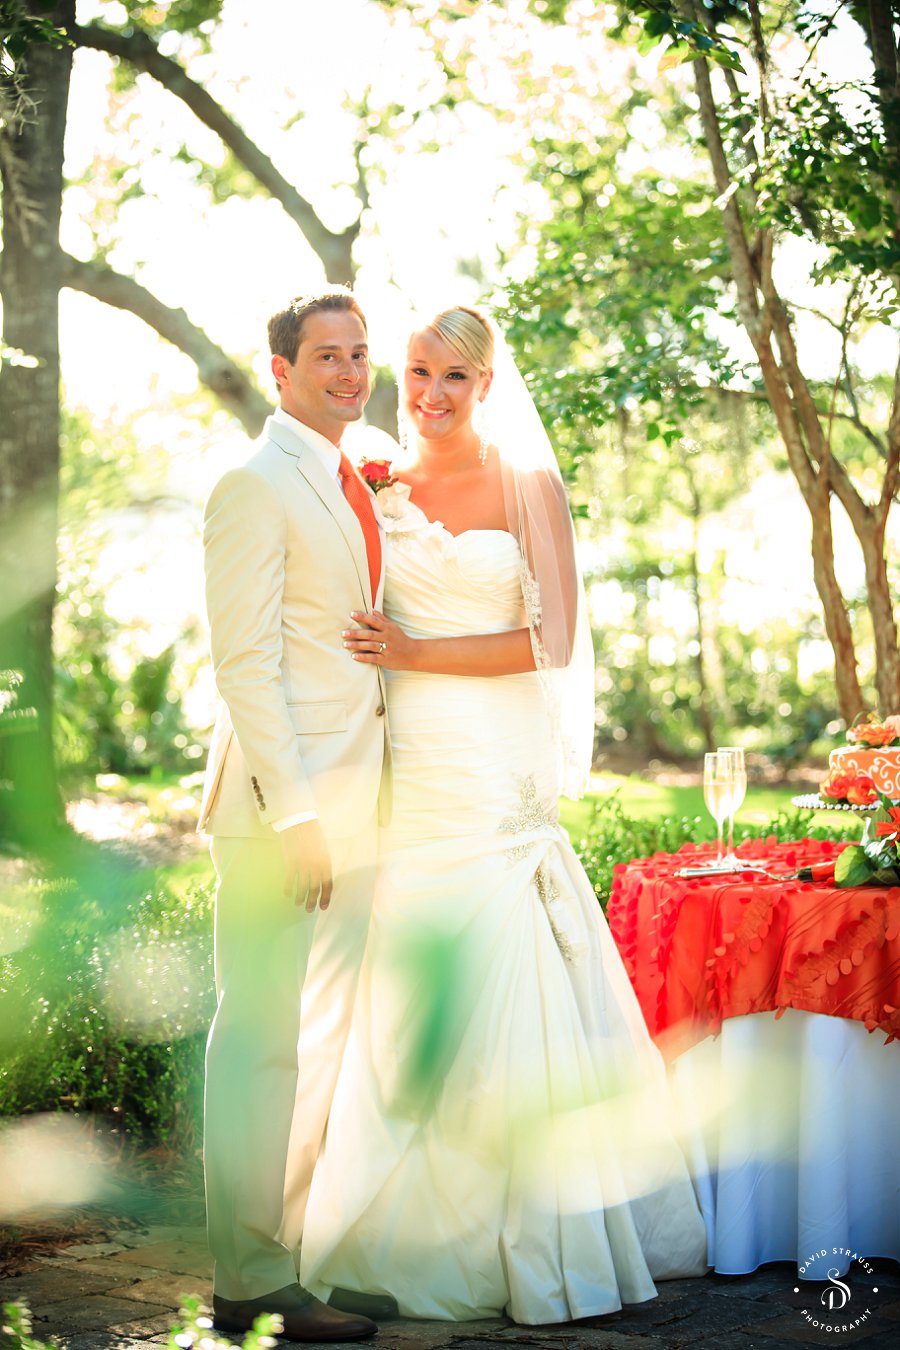 Charleston Wedding Photography - River Oaks Venue - Photographer David Strauss - 17